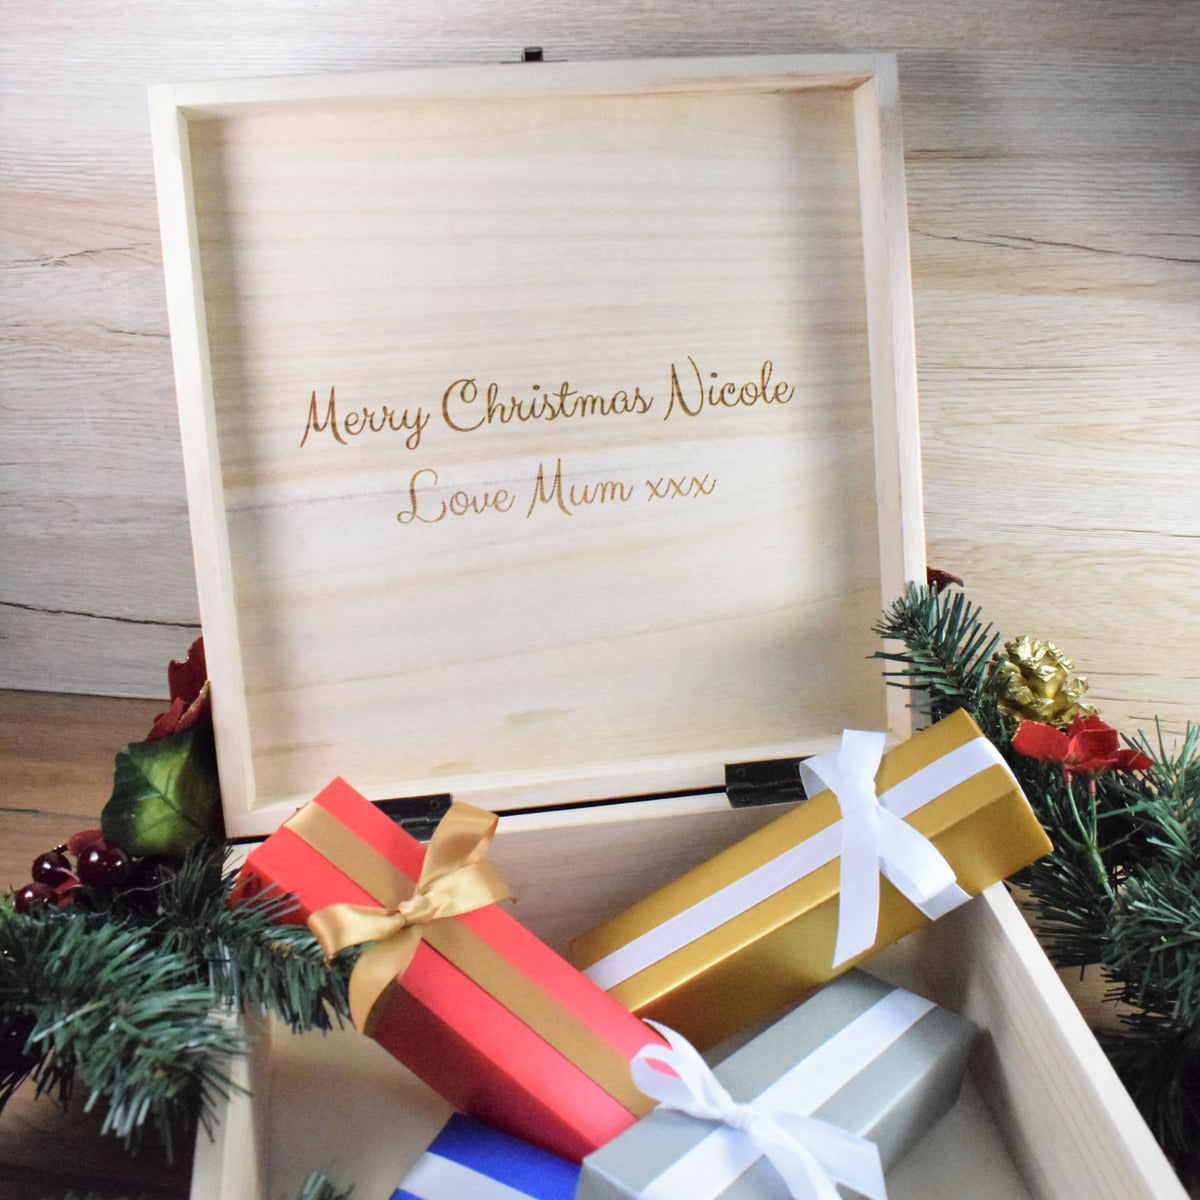 Personalised Wooden Christmas Eve Box - Santa, Snowman & Penguin